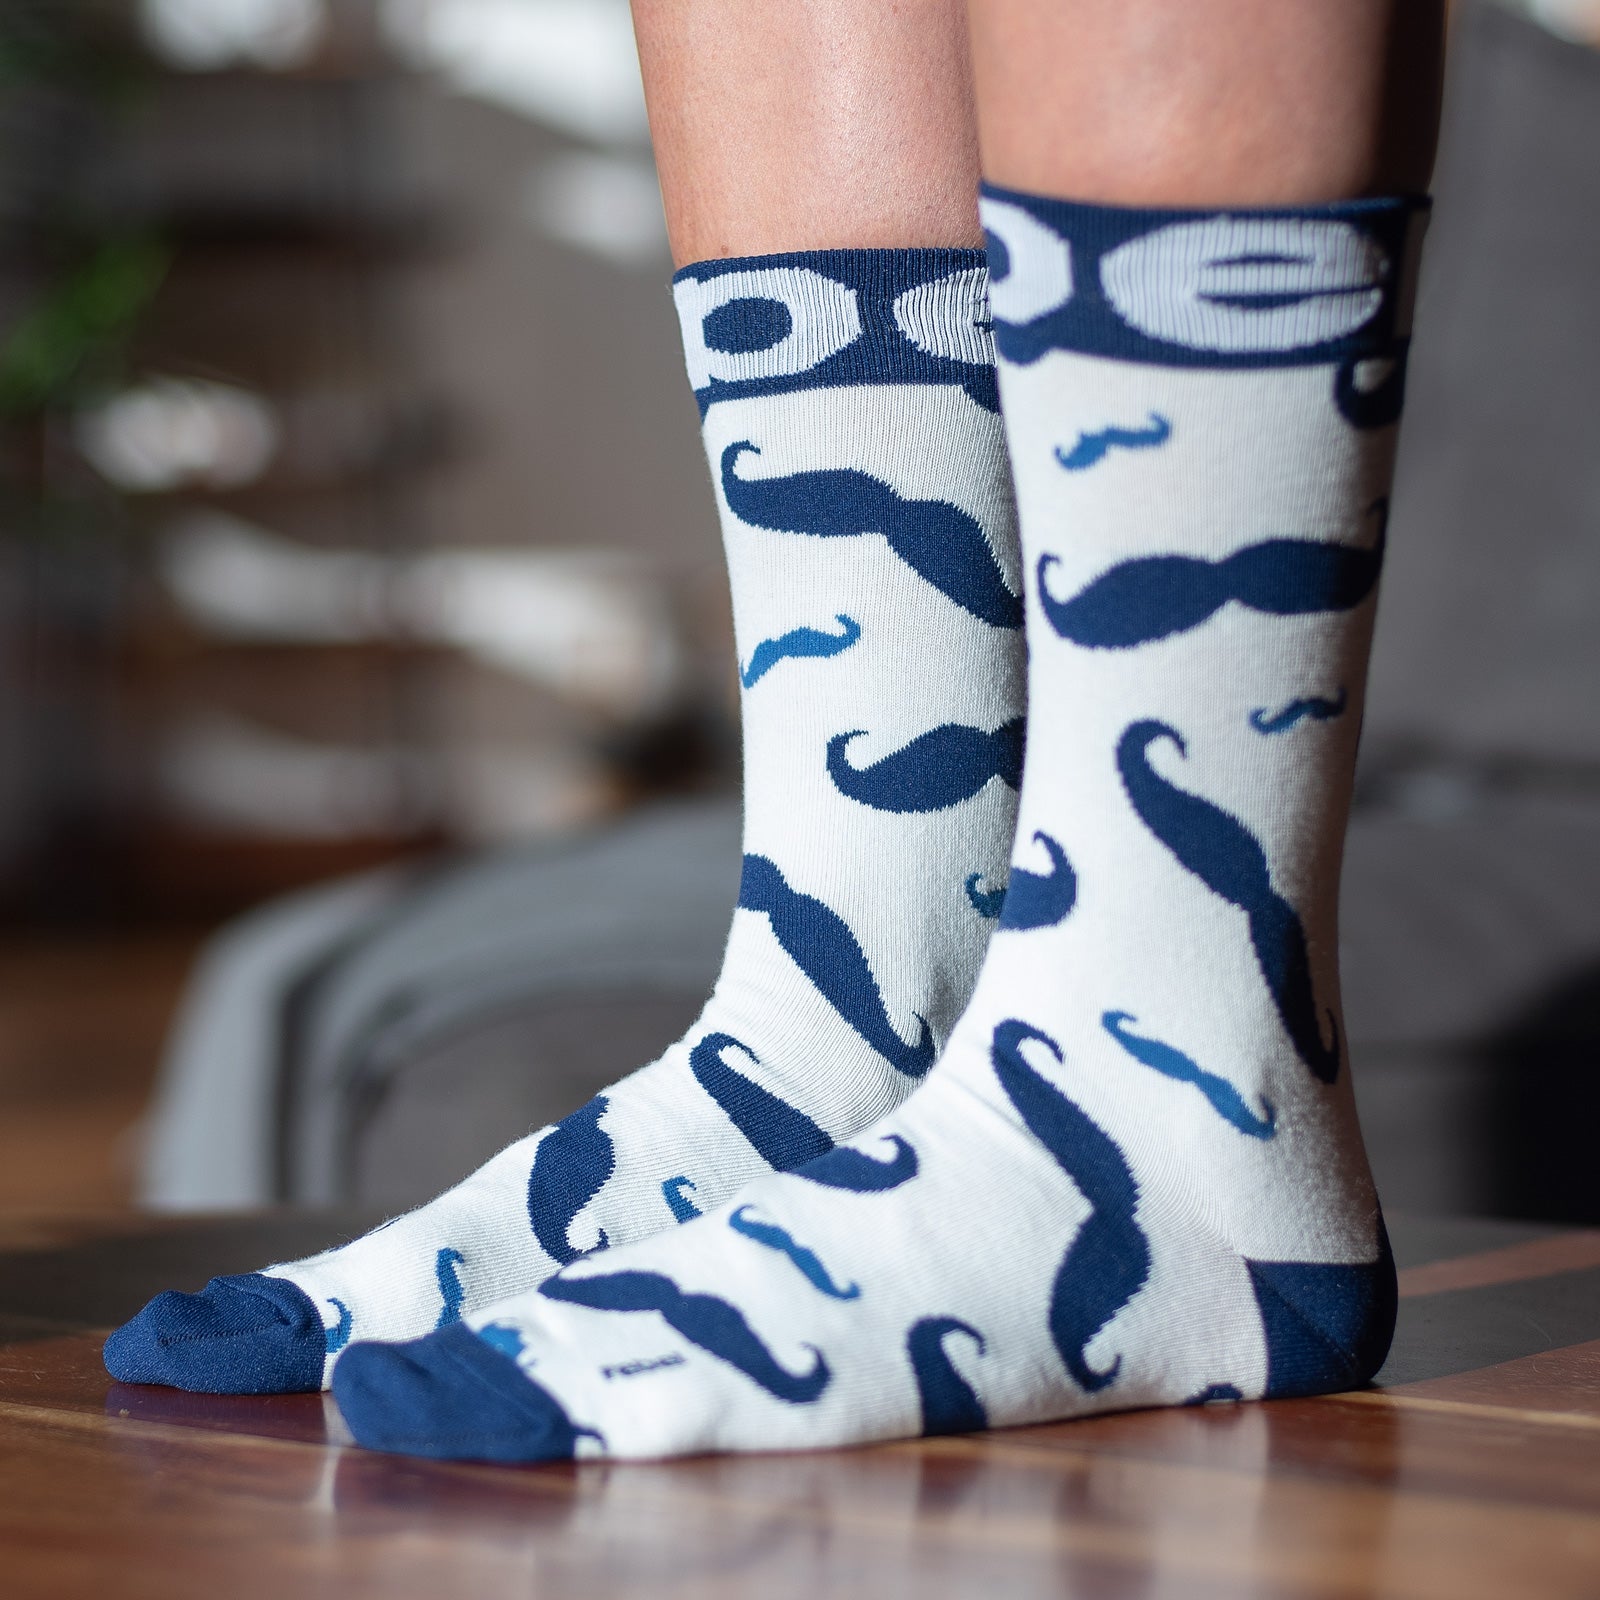 Rebel Fashion's Funky Stache Socks